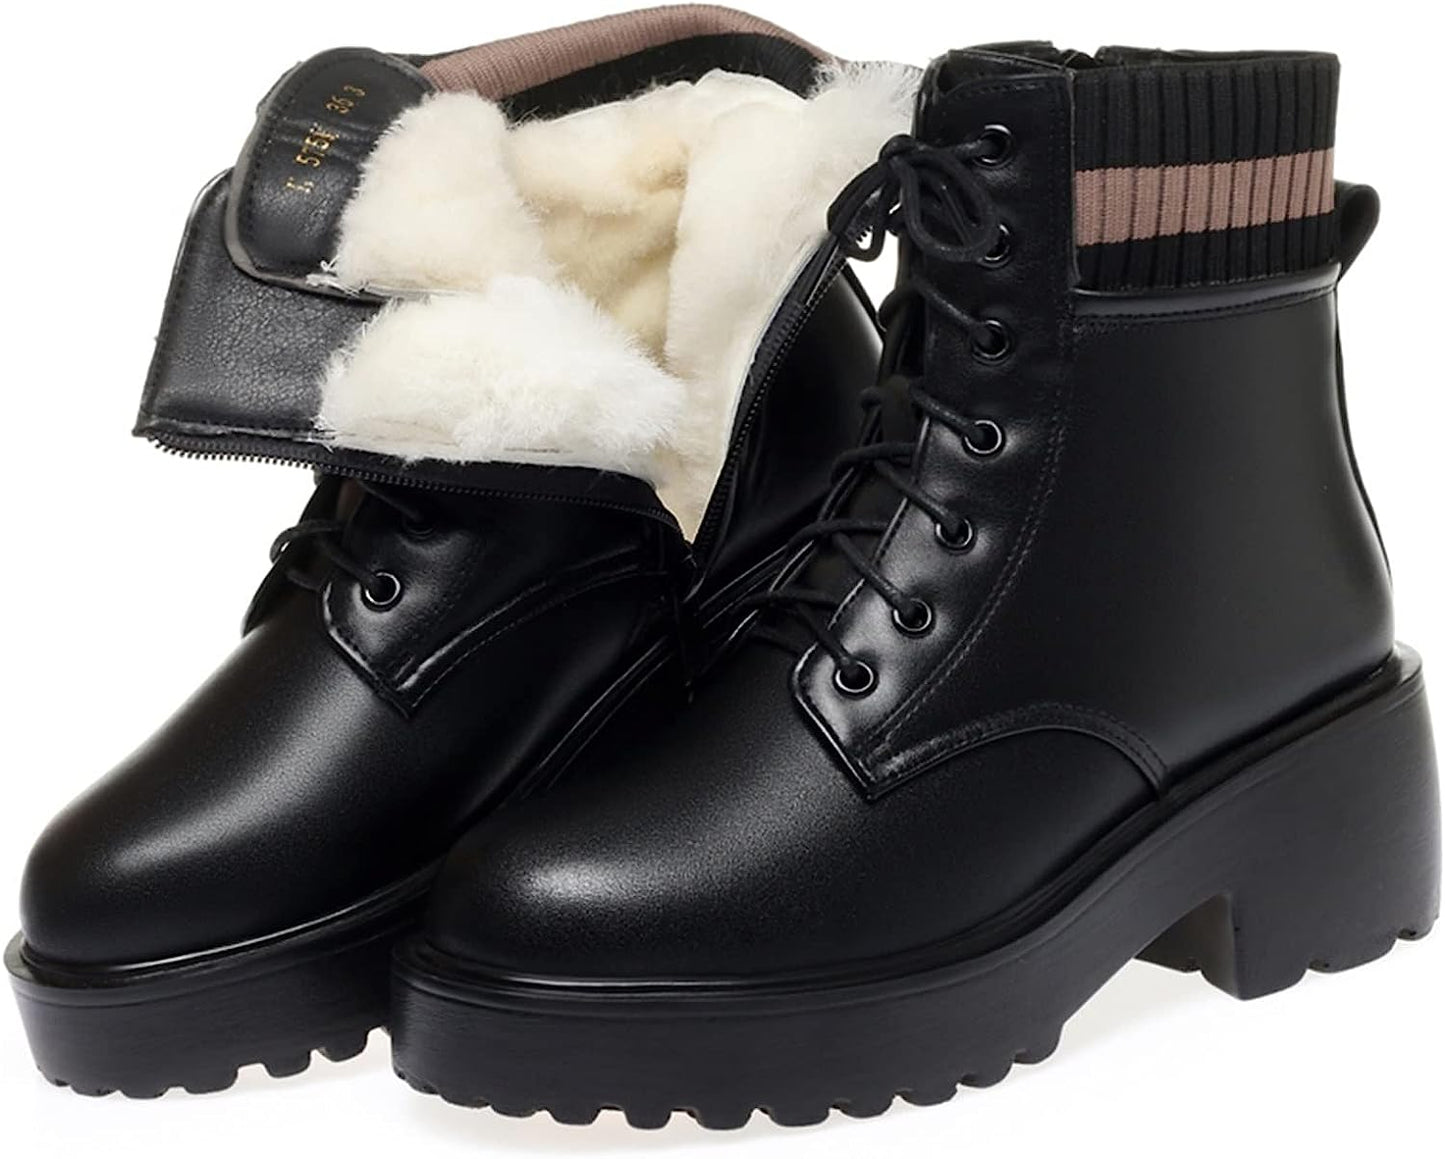 Ladies Boots， Women's Winter Boots Plus Size Wool Warm Leather Women's Socks Boots Non-Slip Shoes Booties Women (Color : Black, Size : 6.5 UK)